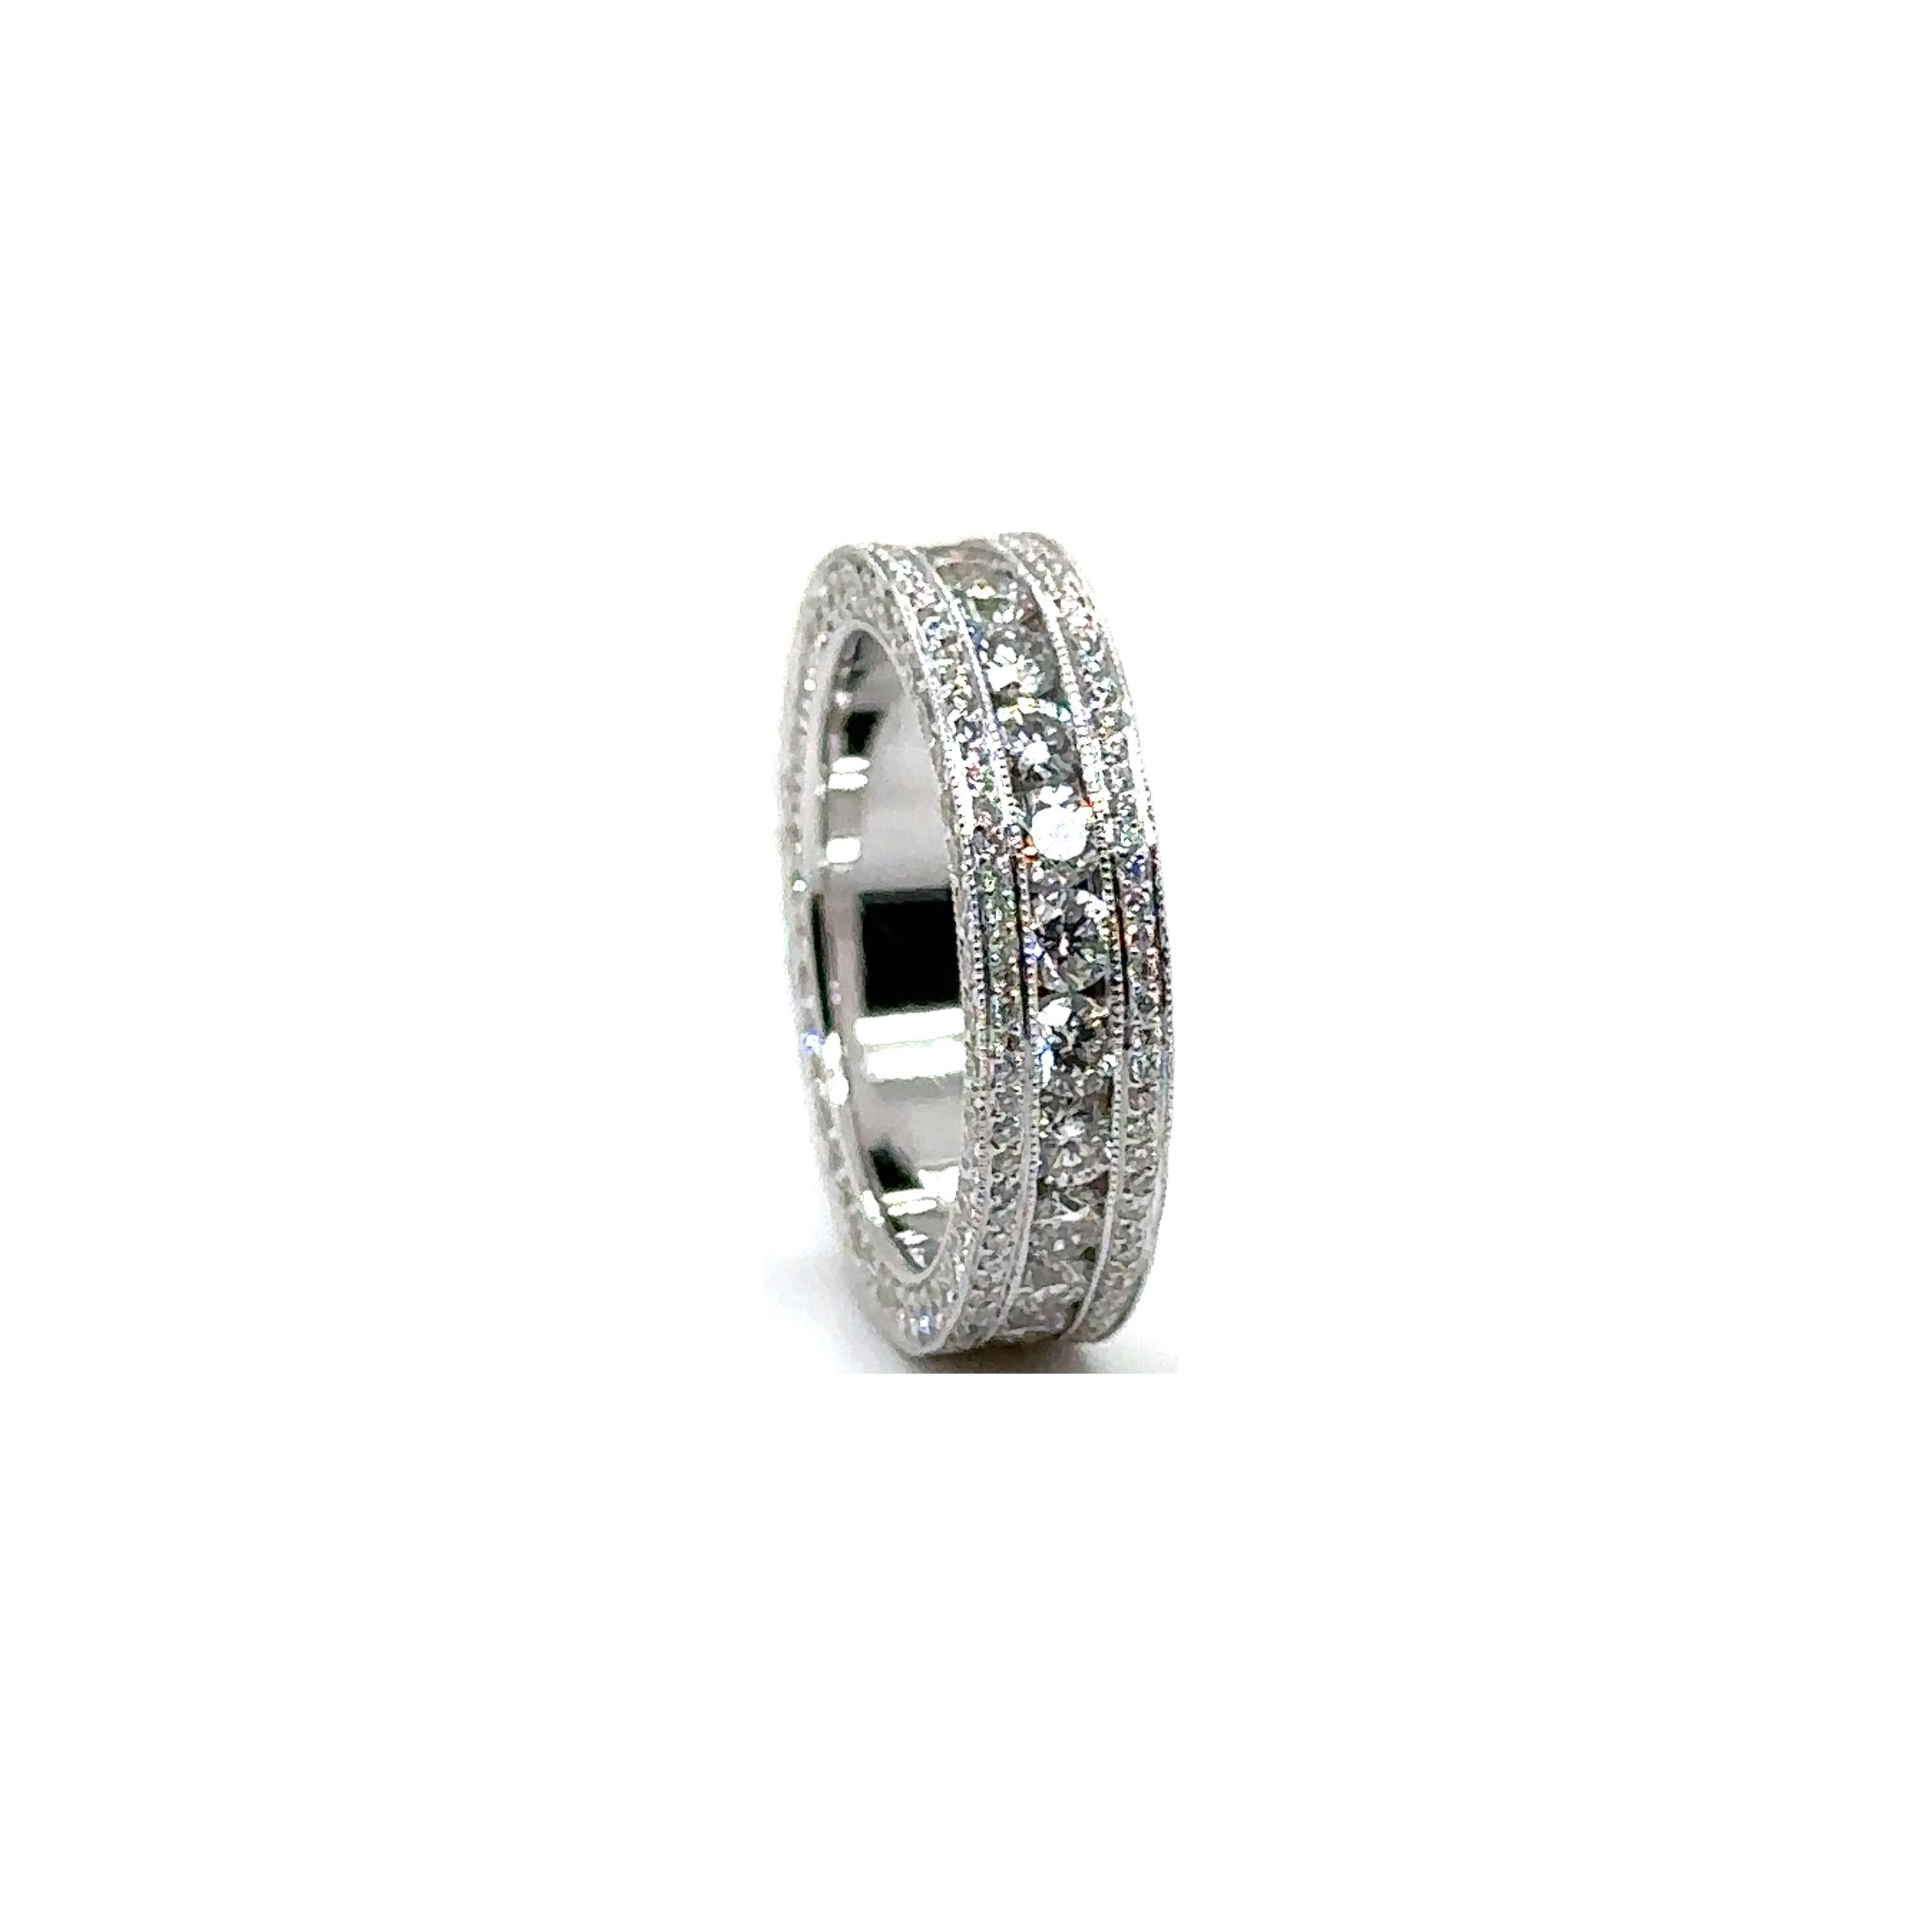 RTR004 - 18K White Gold Wedding Ring with Diamond